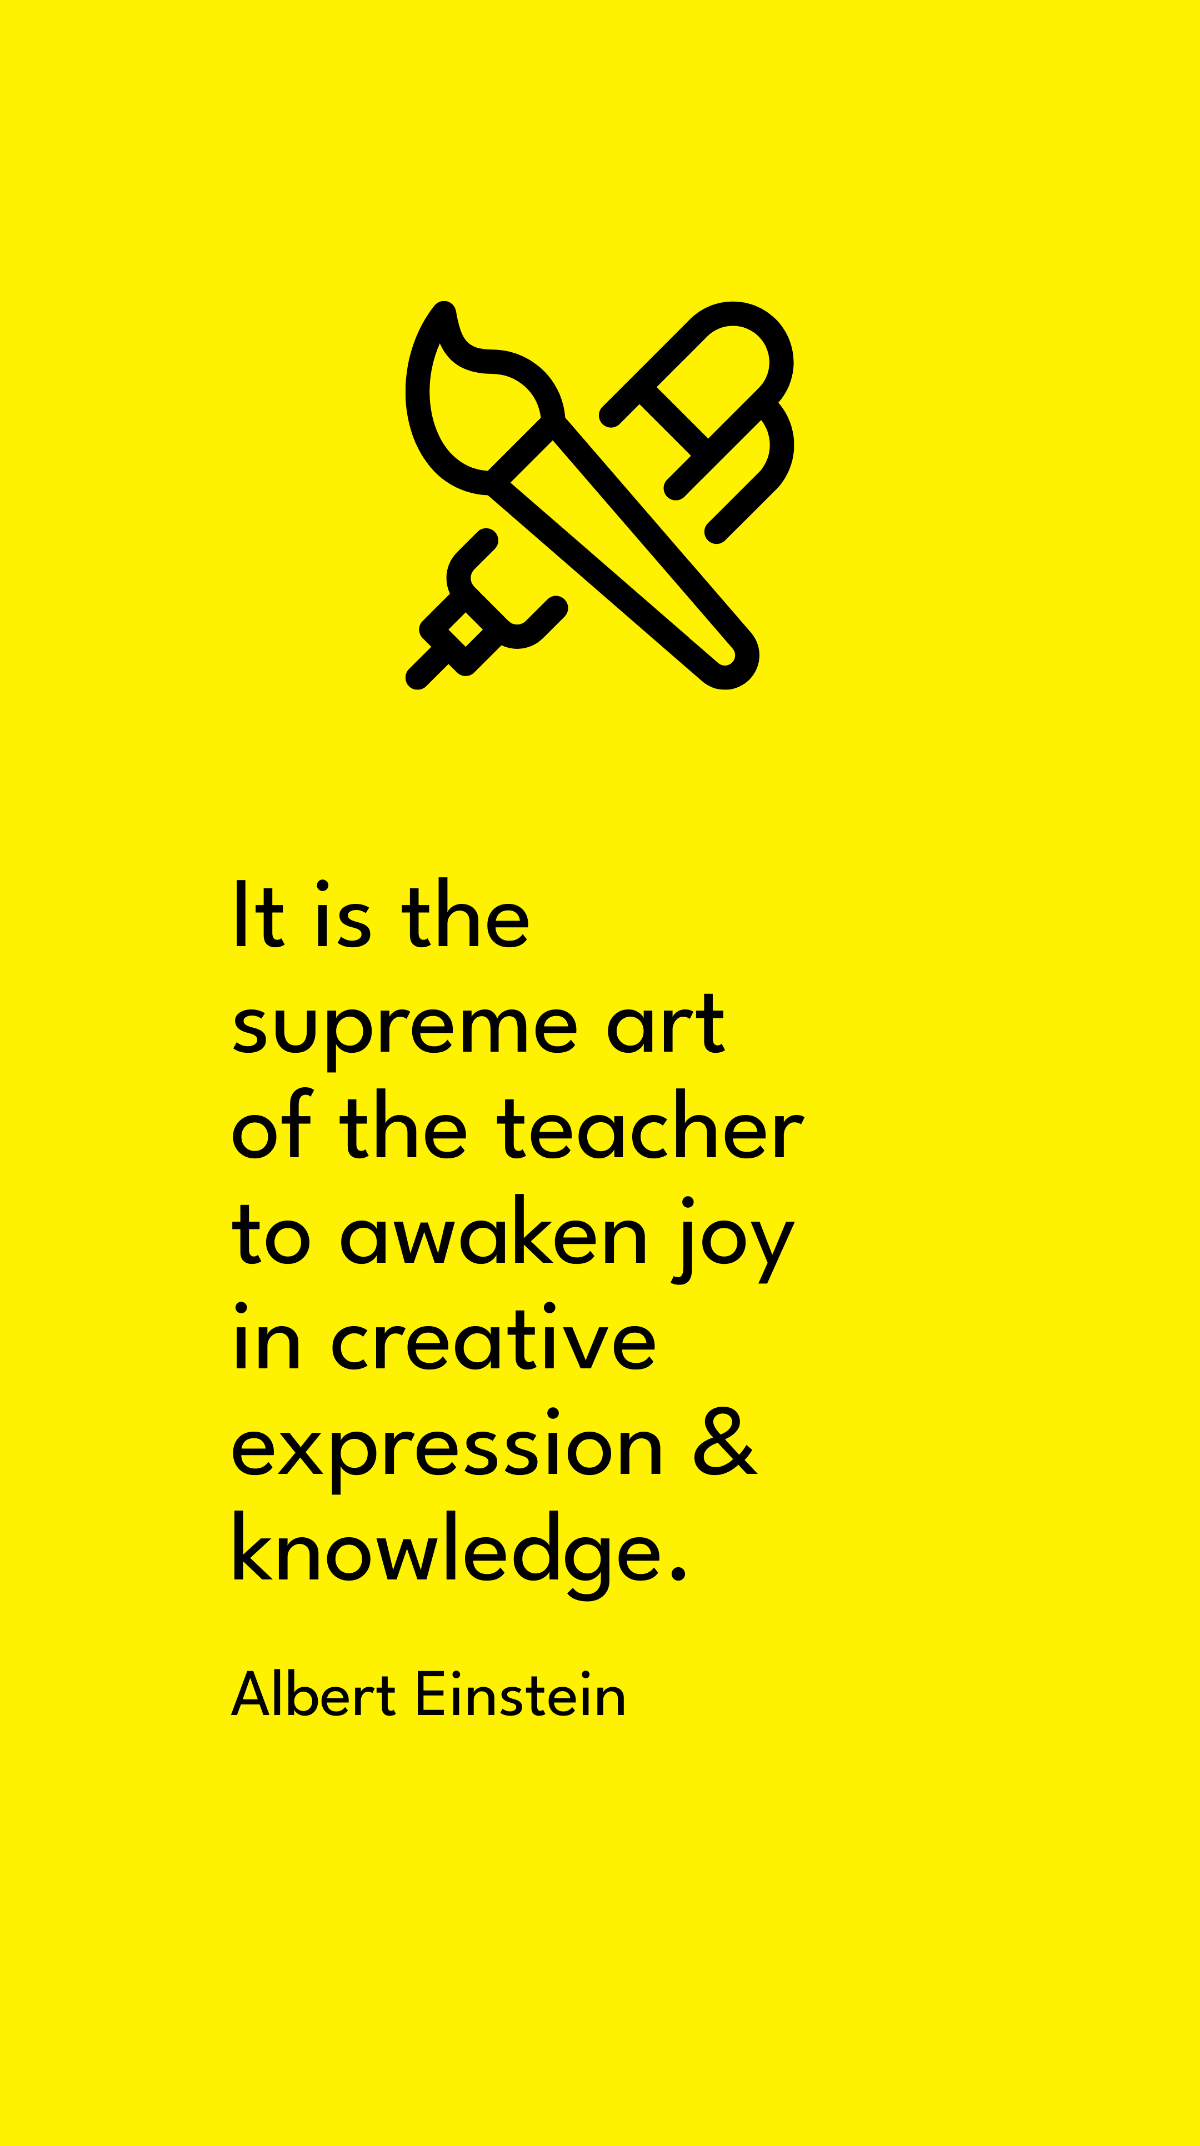 Free Albert Einstein - It is the supreme art of the teacher to awaken joy in creative expression & knowledge. Template